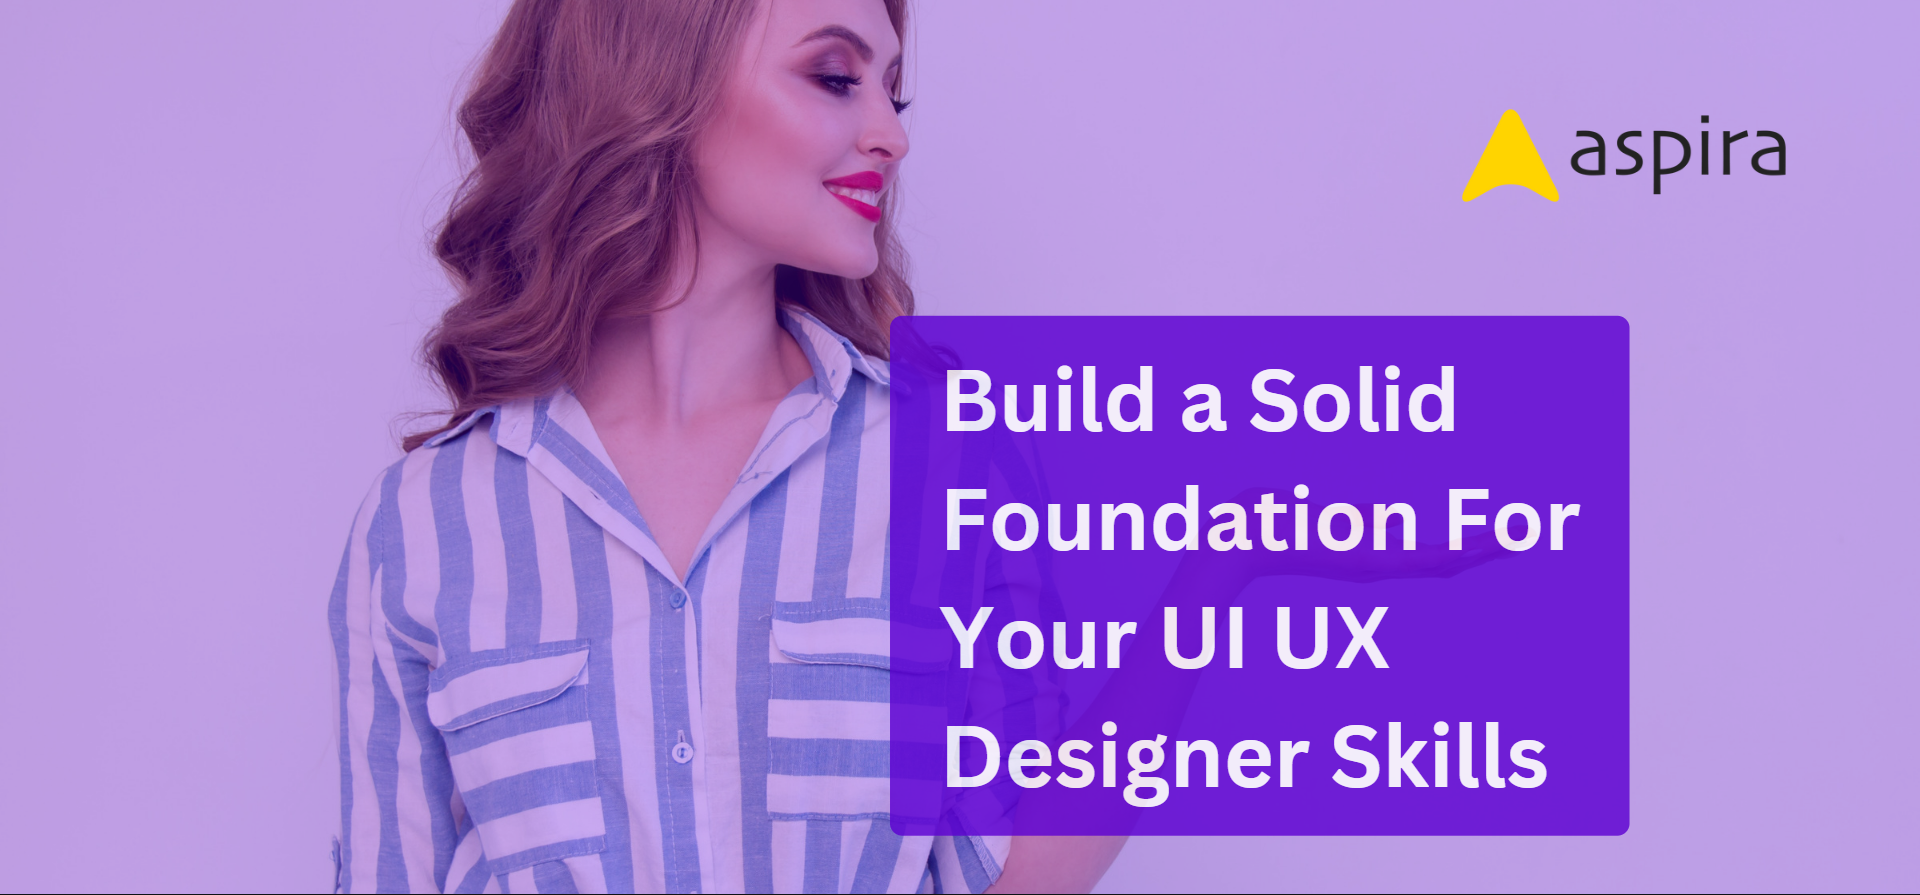 Build a solid foundation for your UI UX designer skills